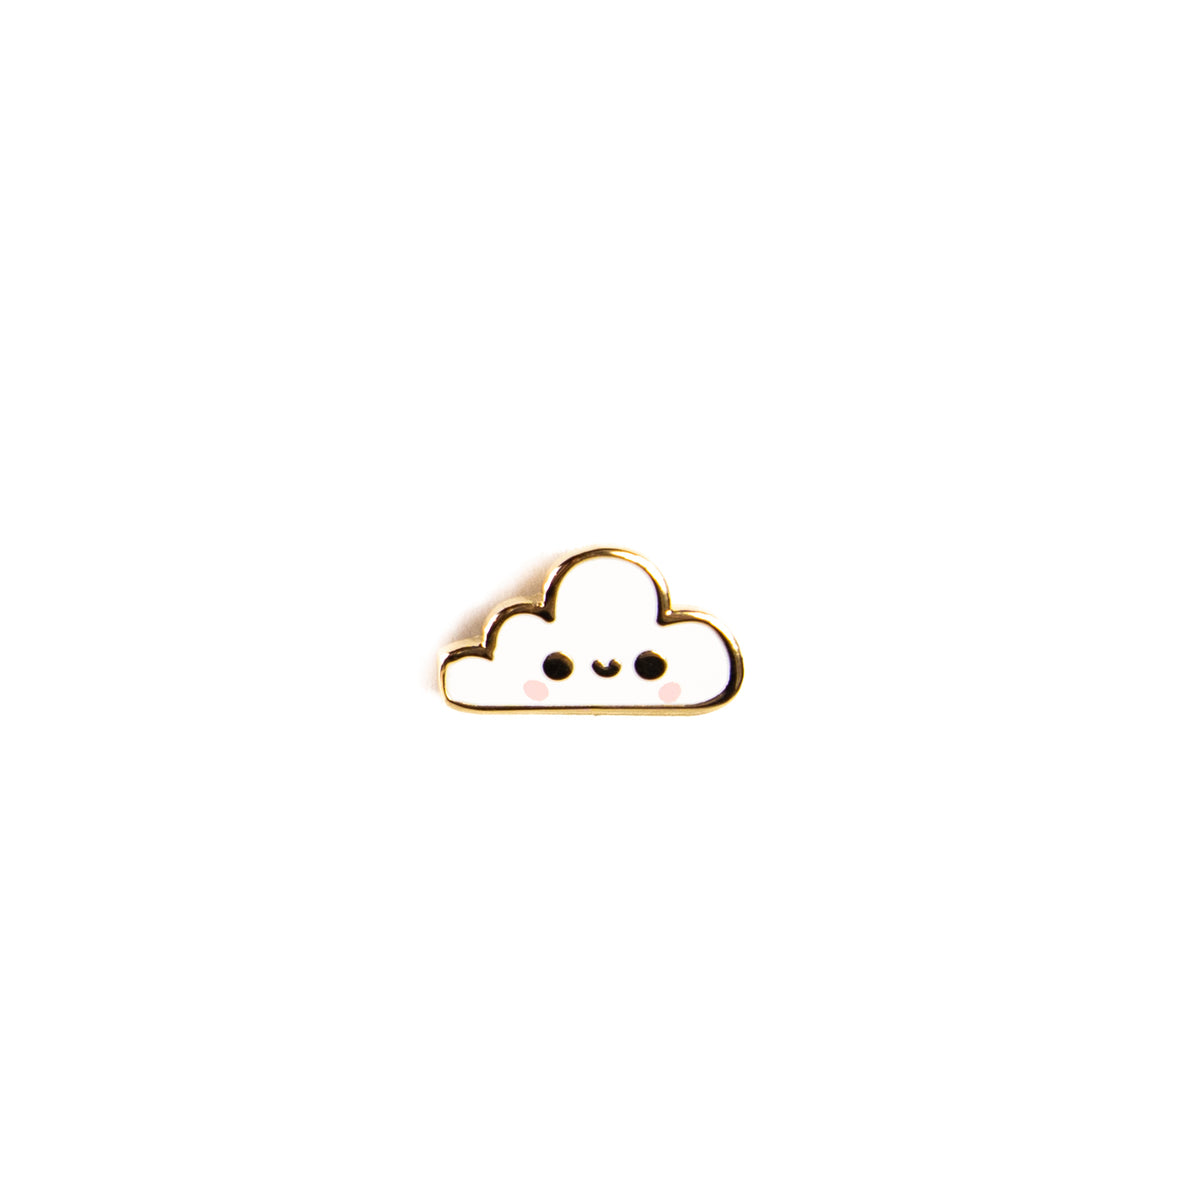 Tiny cloud enamel pin